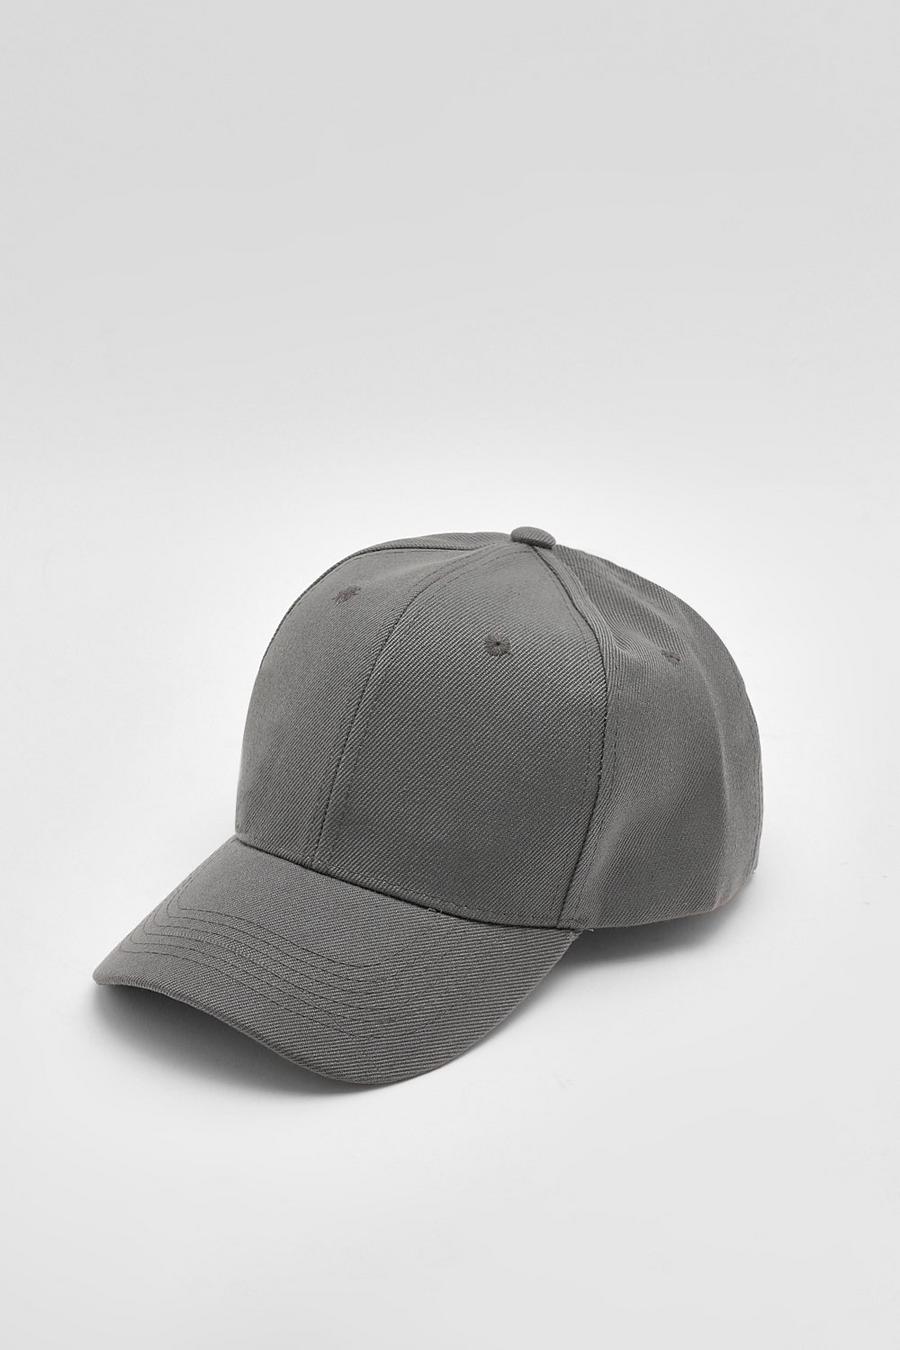 Gorra de béisbol lisa gris oscura, Dark grey gris image number 1